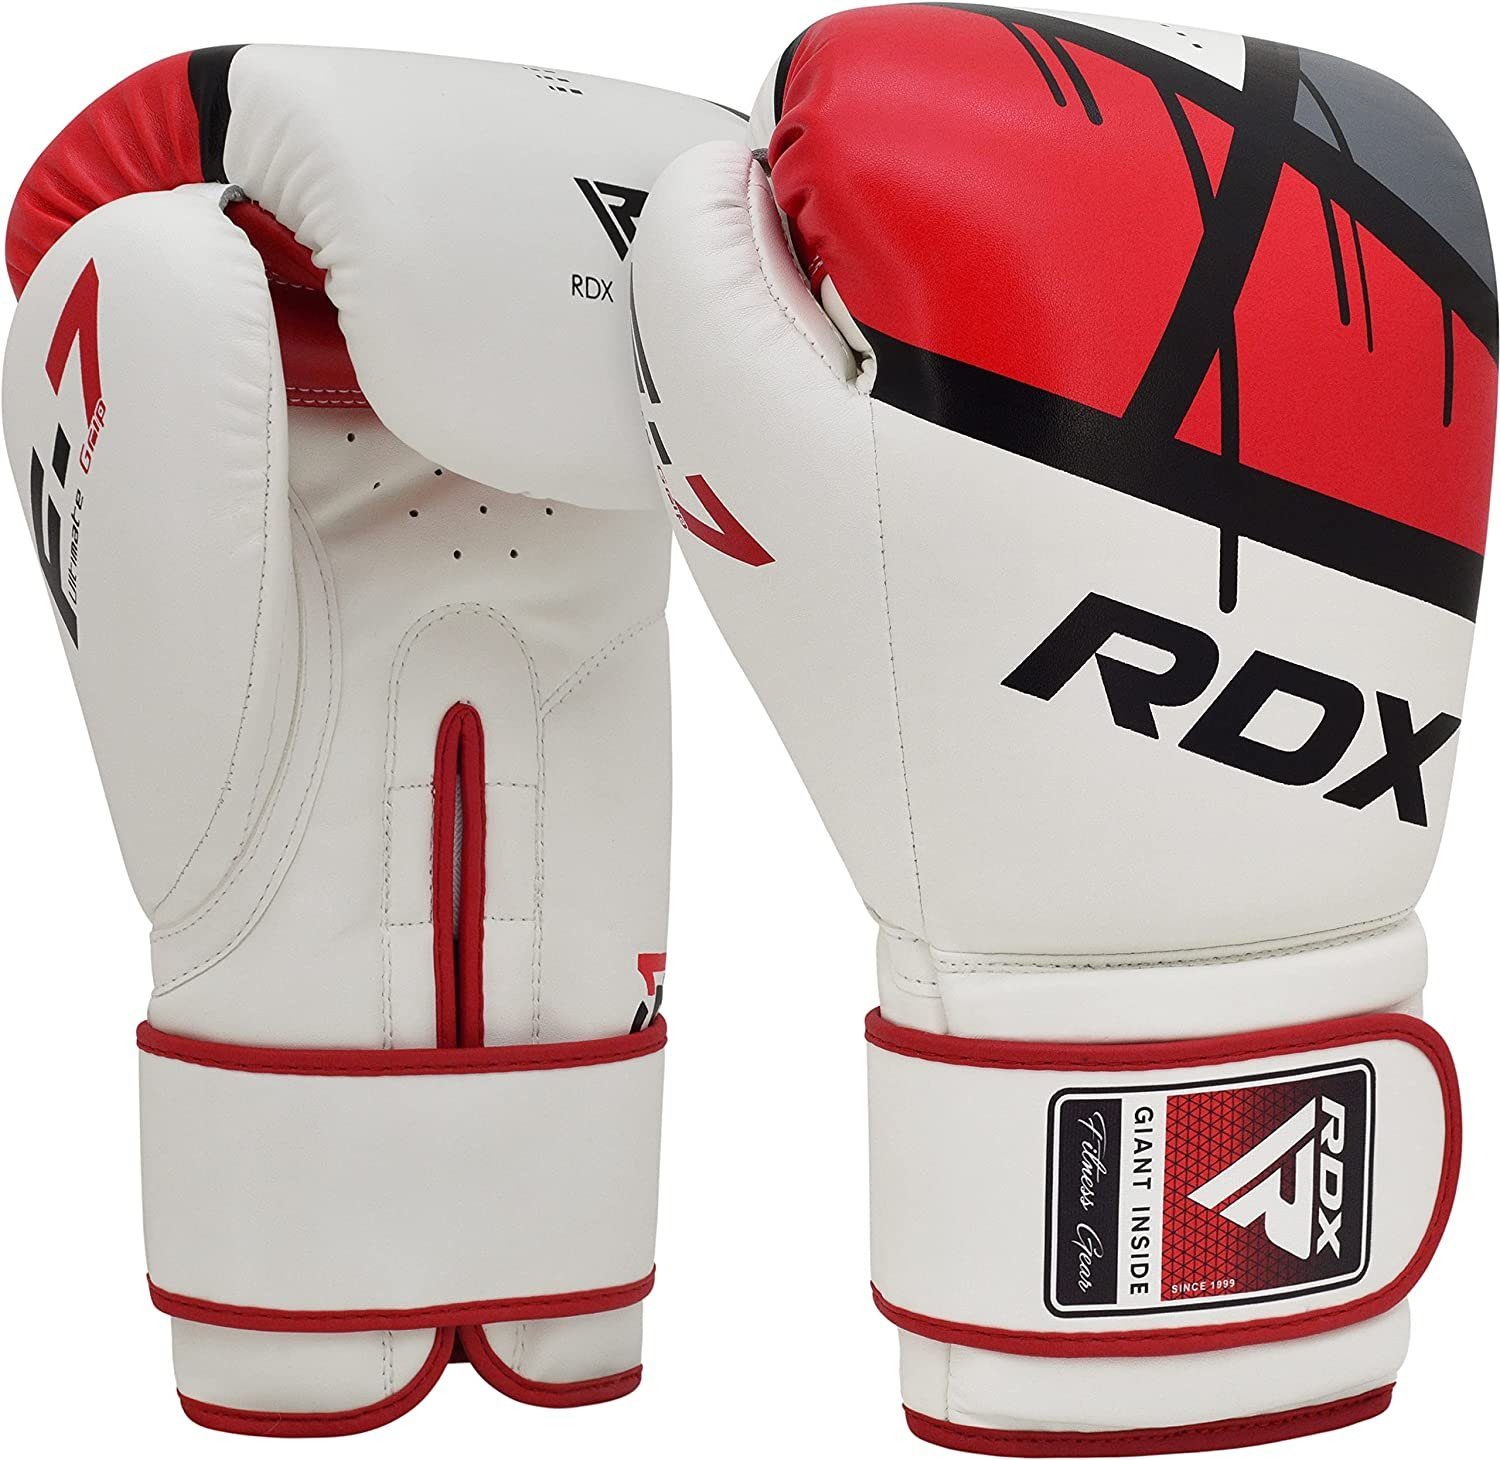 Boxhandschuhe Thai Boxhandschuhe Training RDX Sparring Kickboxing Sports Red RDX Muay Boxsack